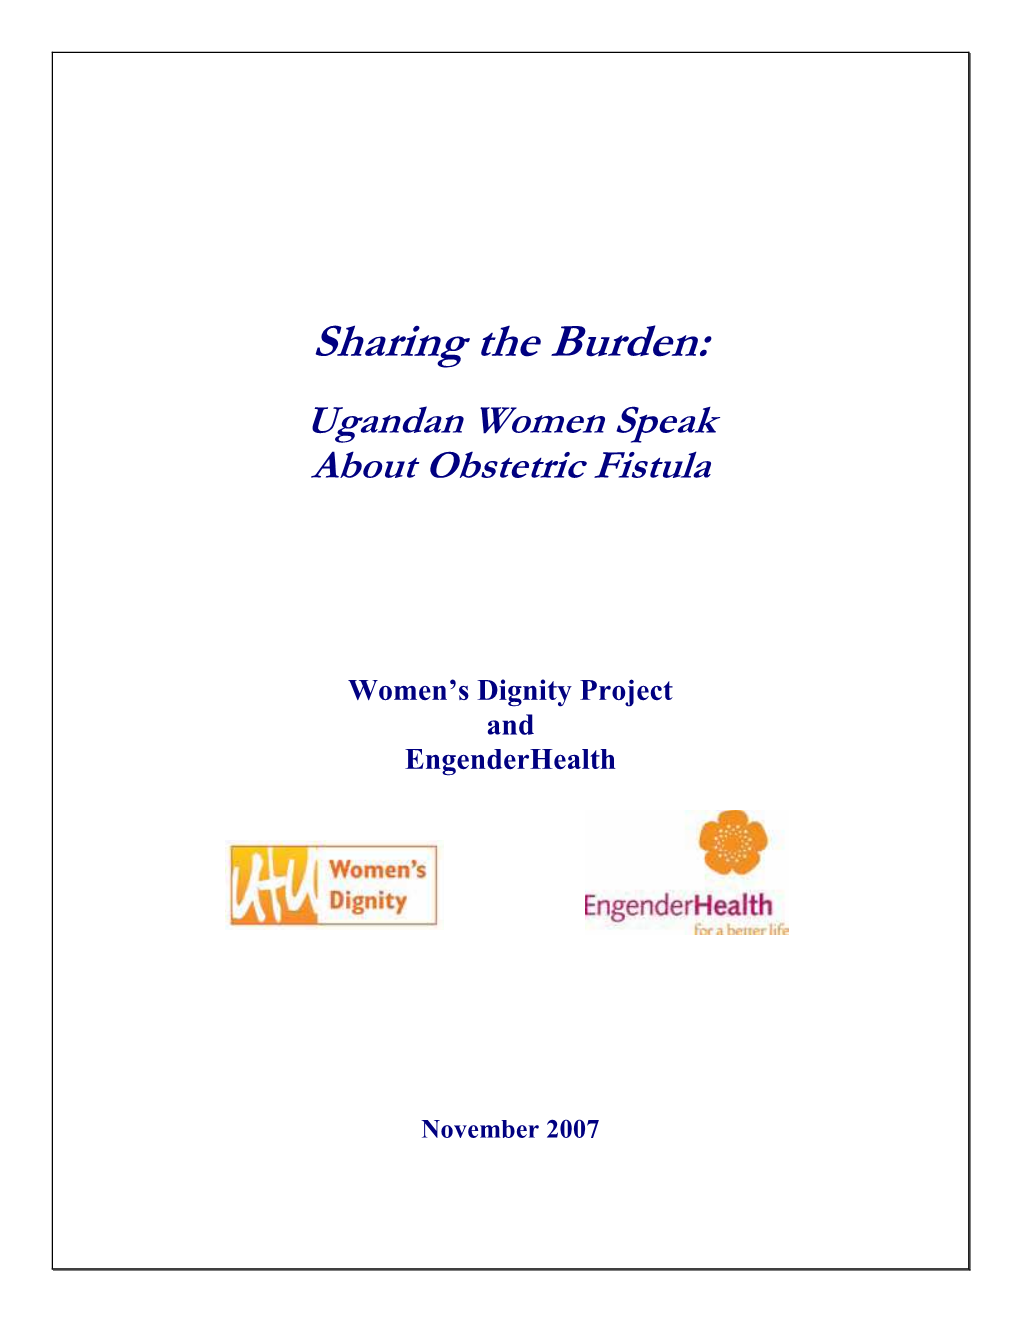 Ugandan Women Speak About Obstetric Fistula